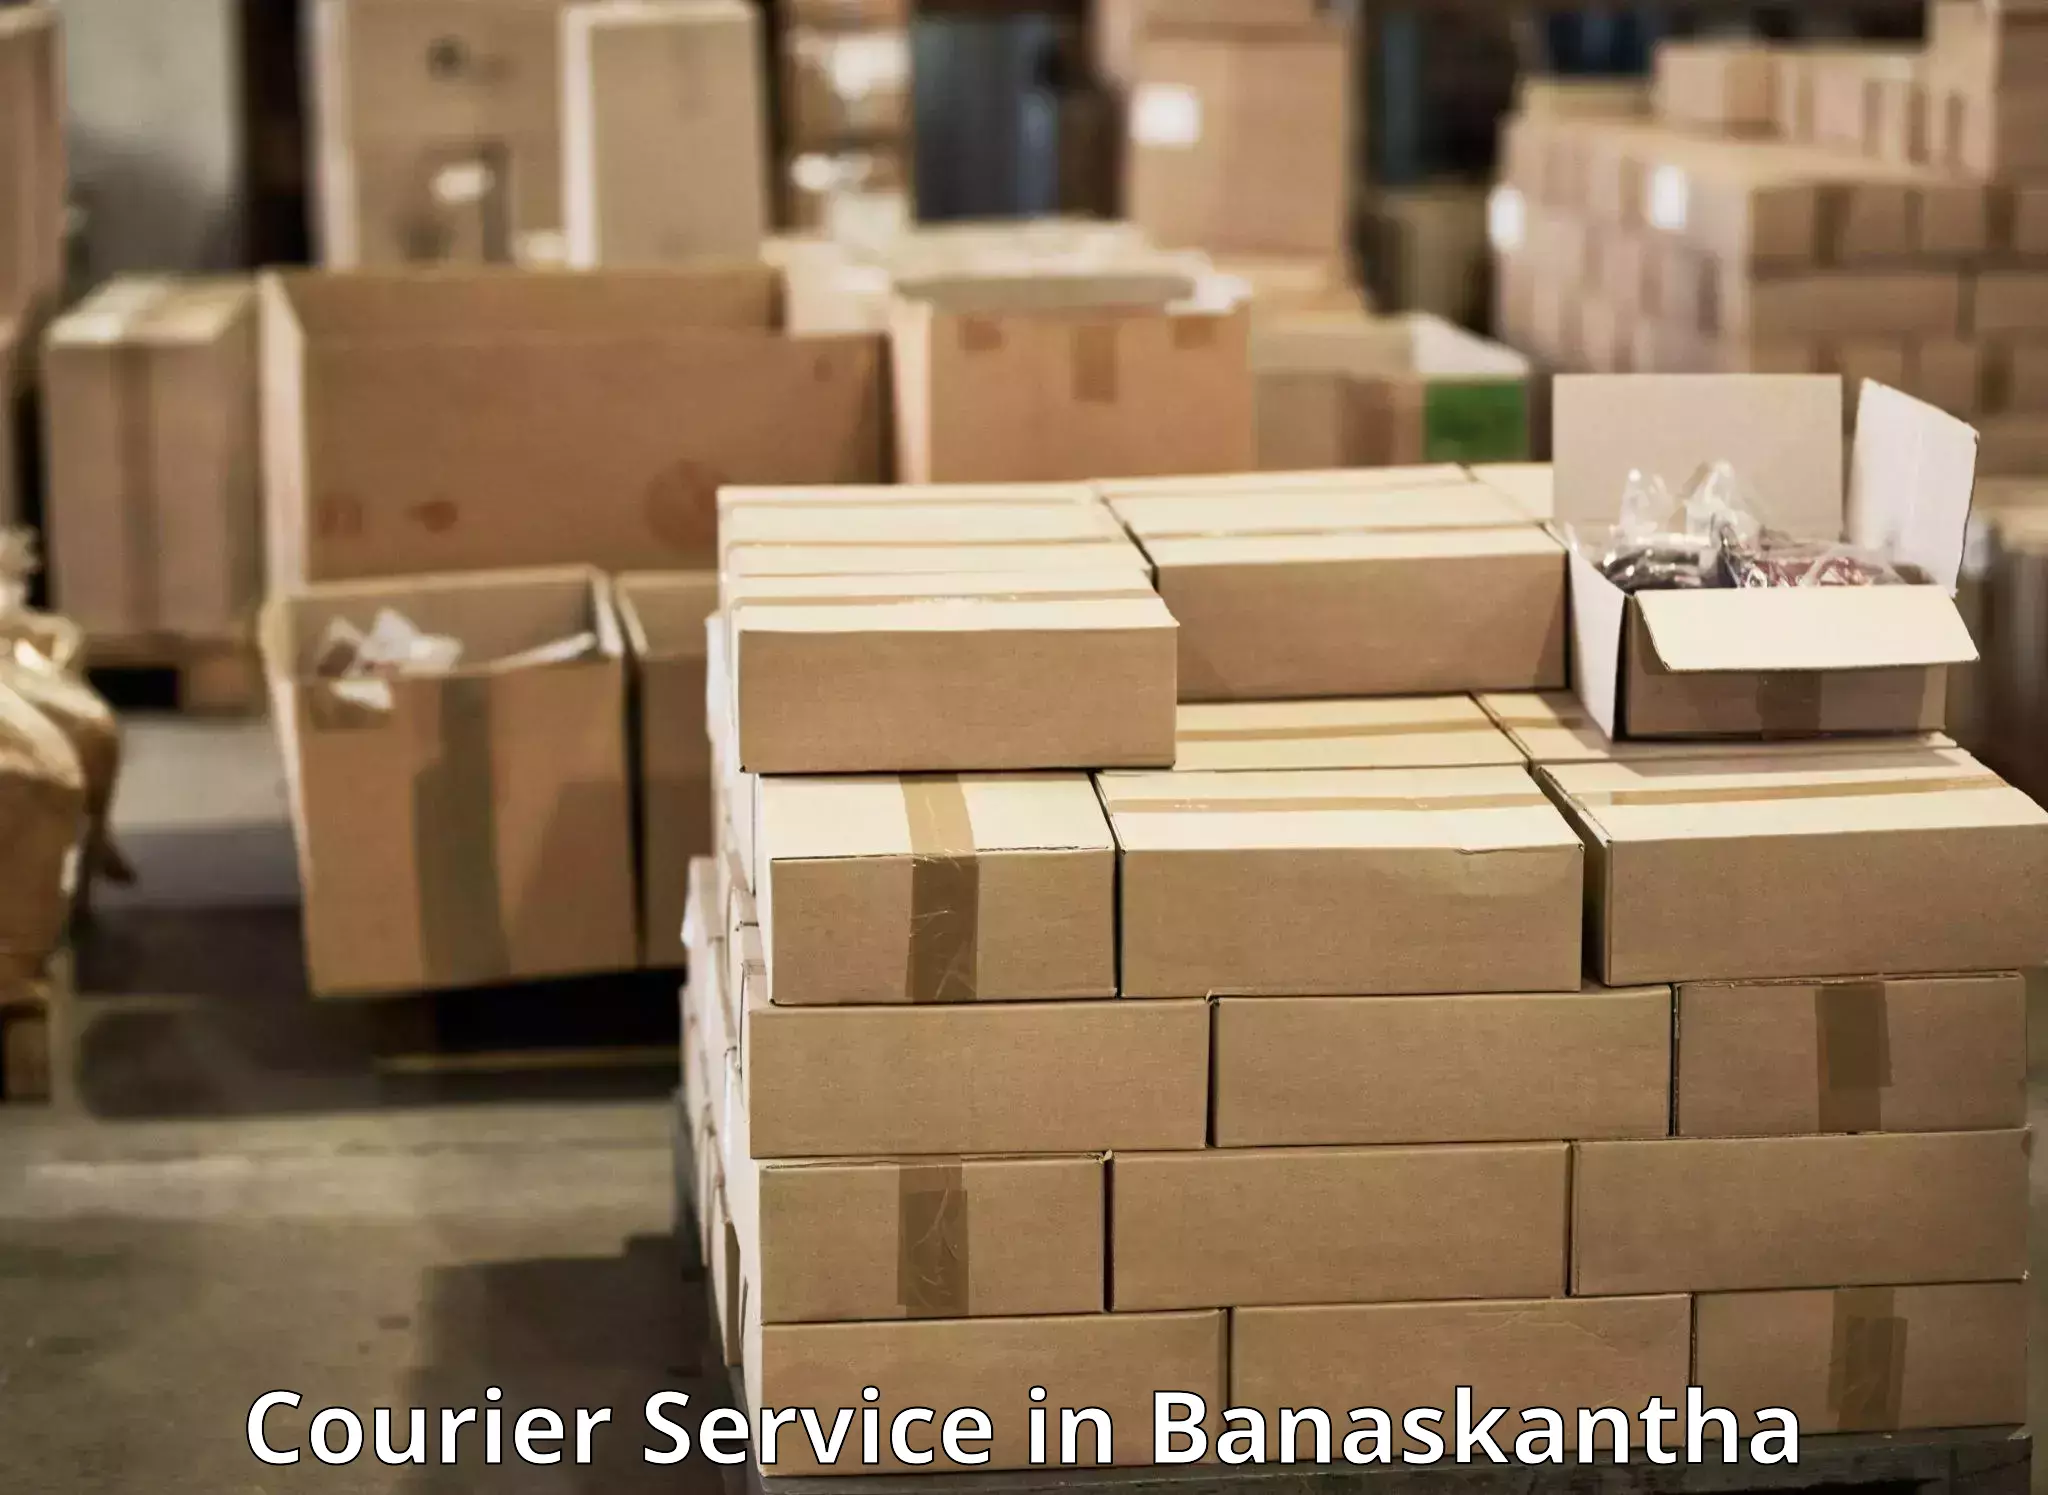 Reliable parcel services in Banaskantha